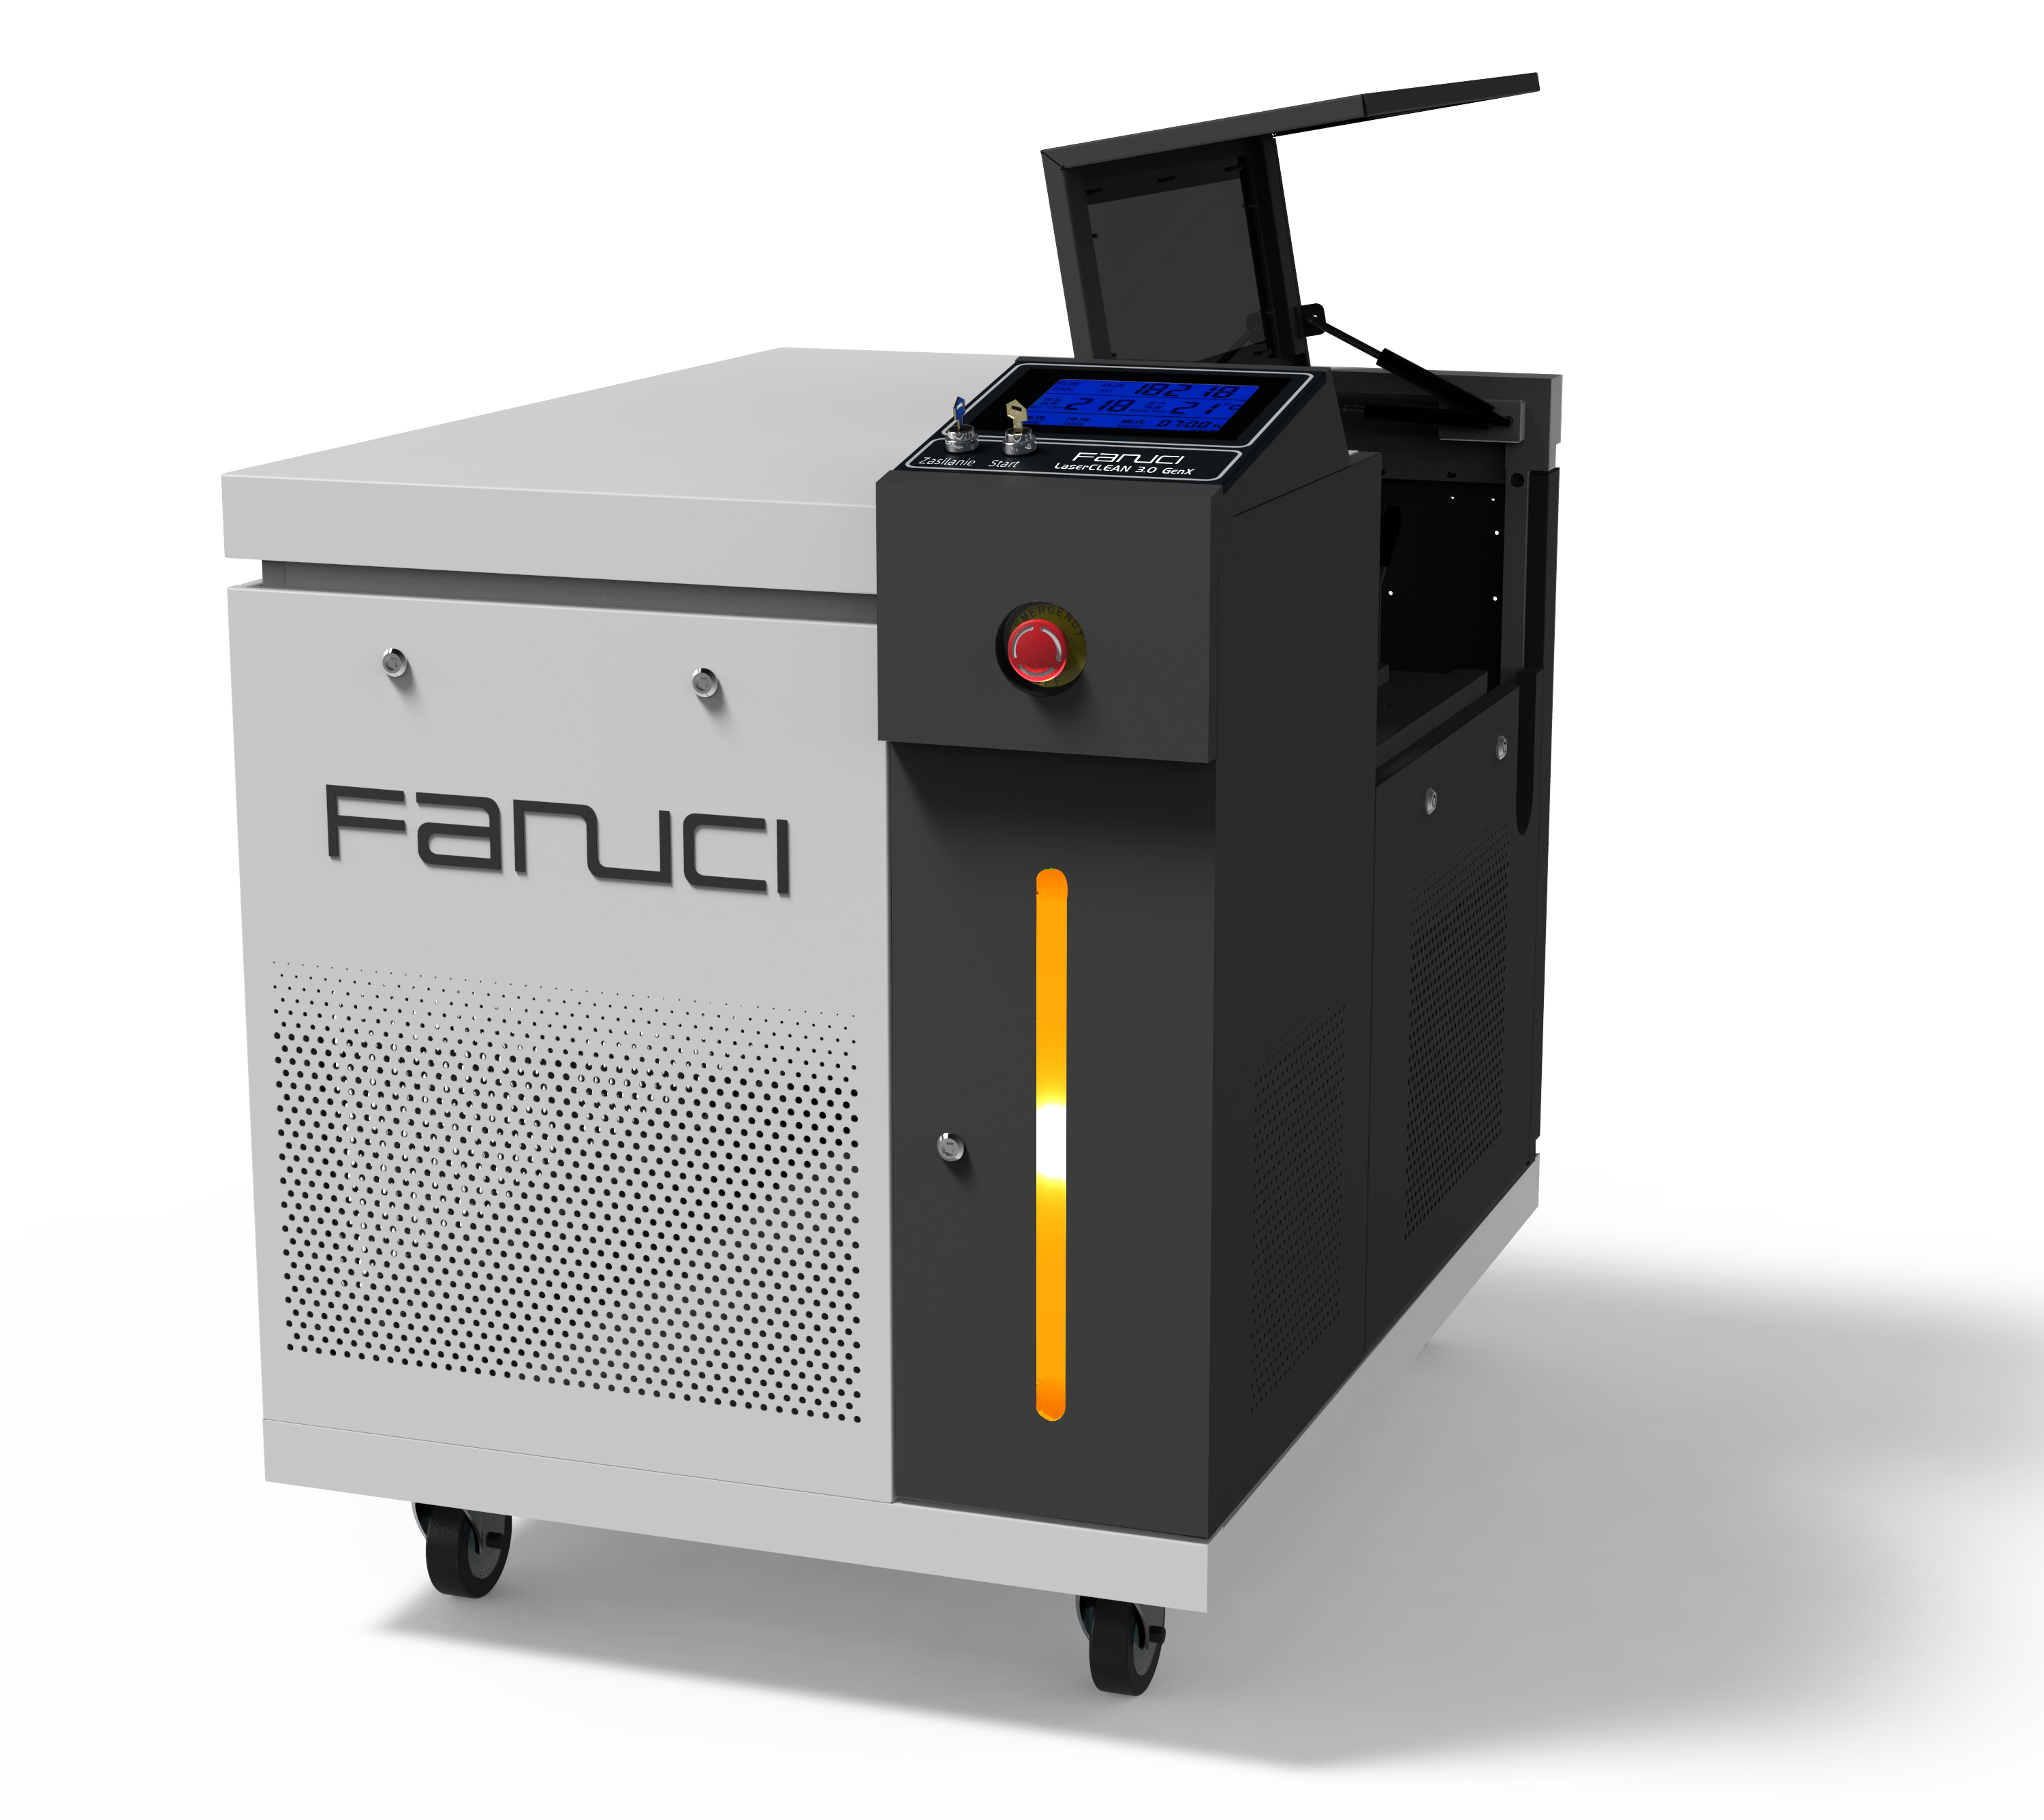 FANUCI® Pro 緊湊型激光焊接機四合一將運往歐洲